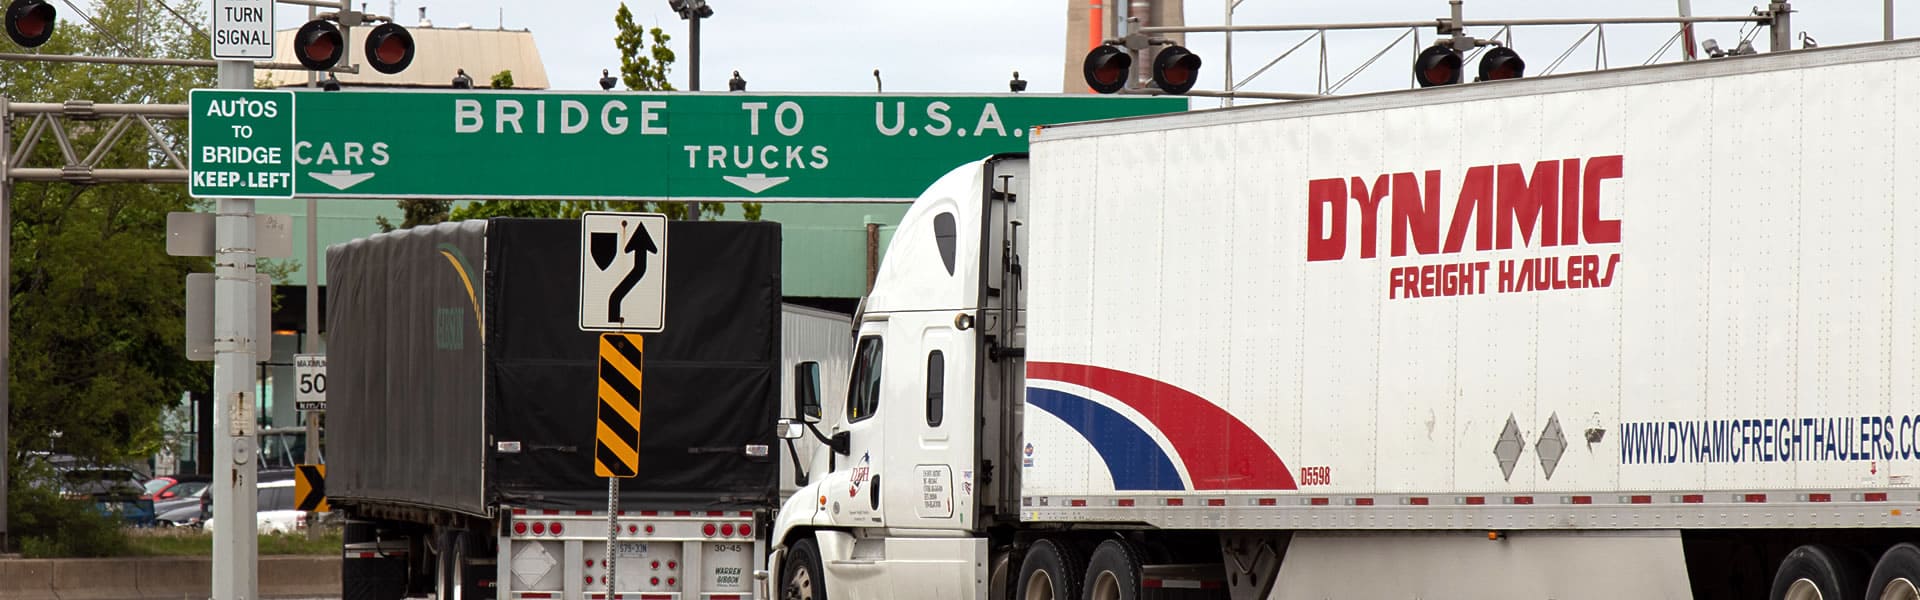 Semi-truck crossing Canada border